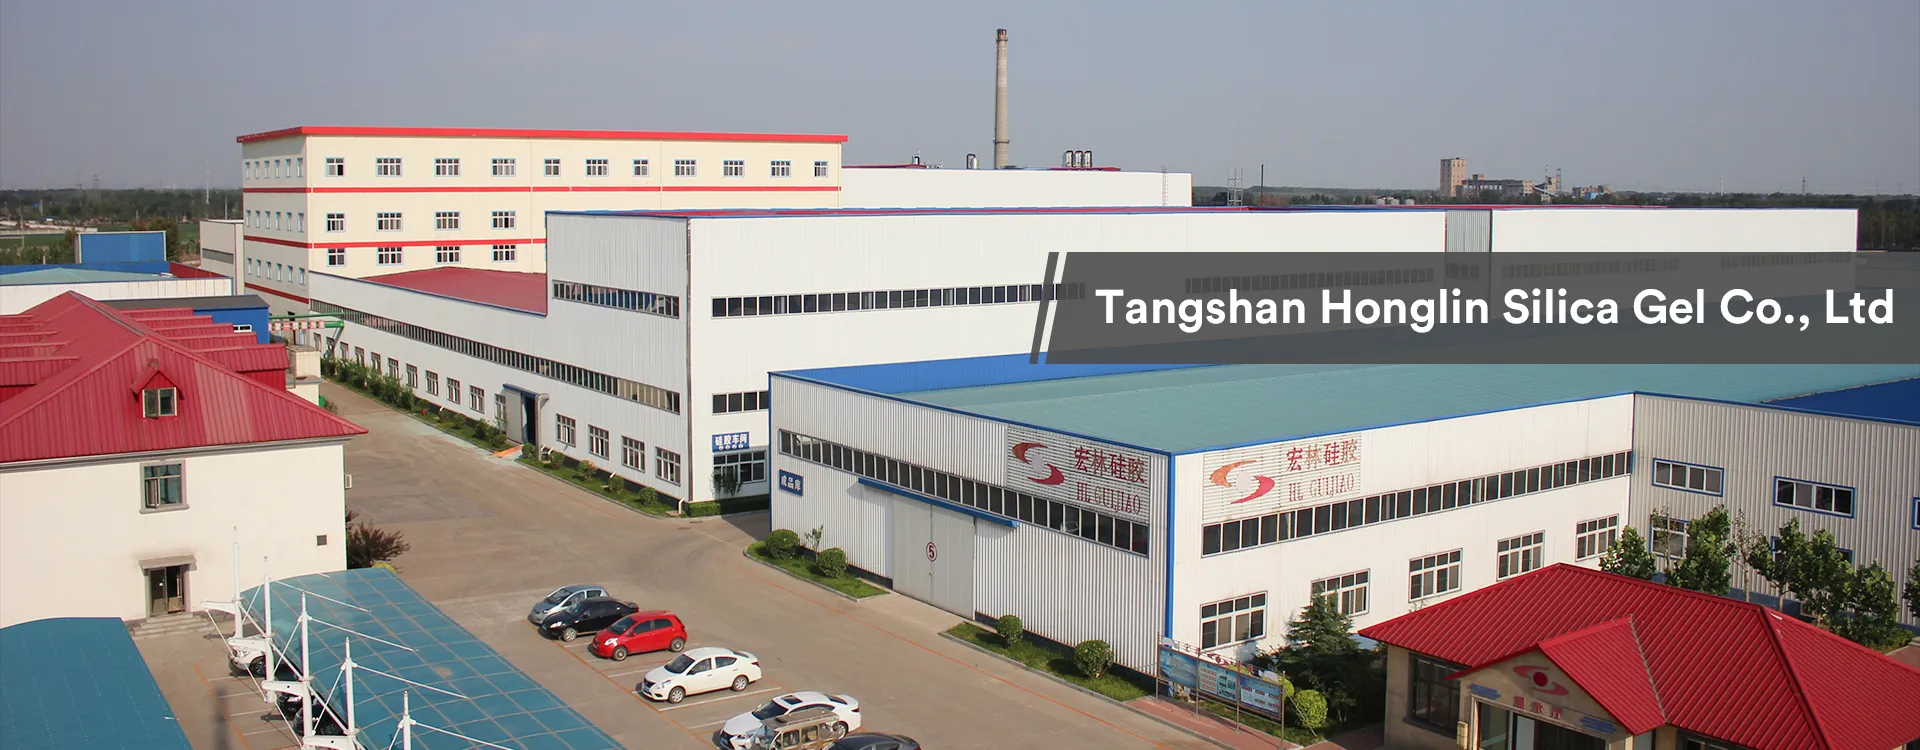 Tangshsn Honglin Silica Gel Co., Ltd.